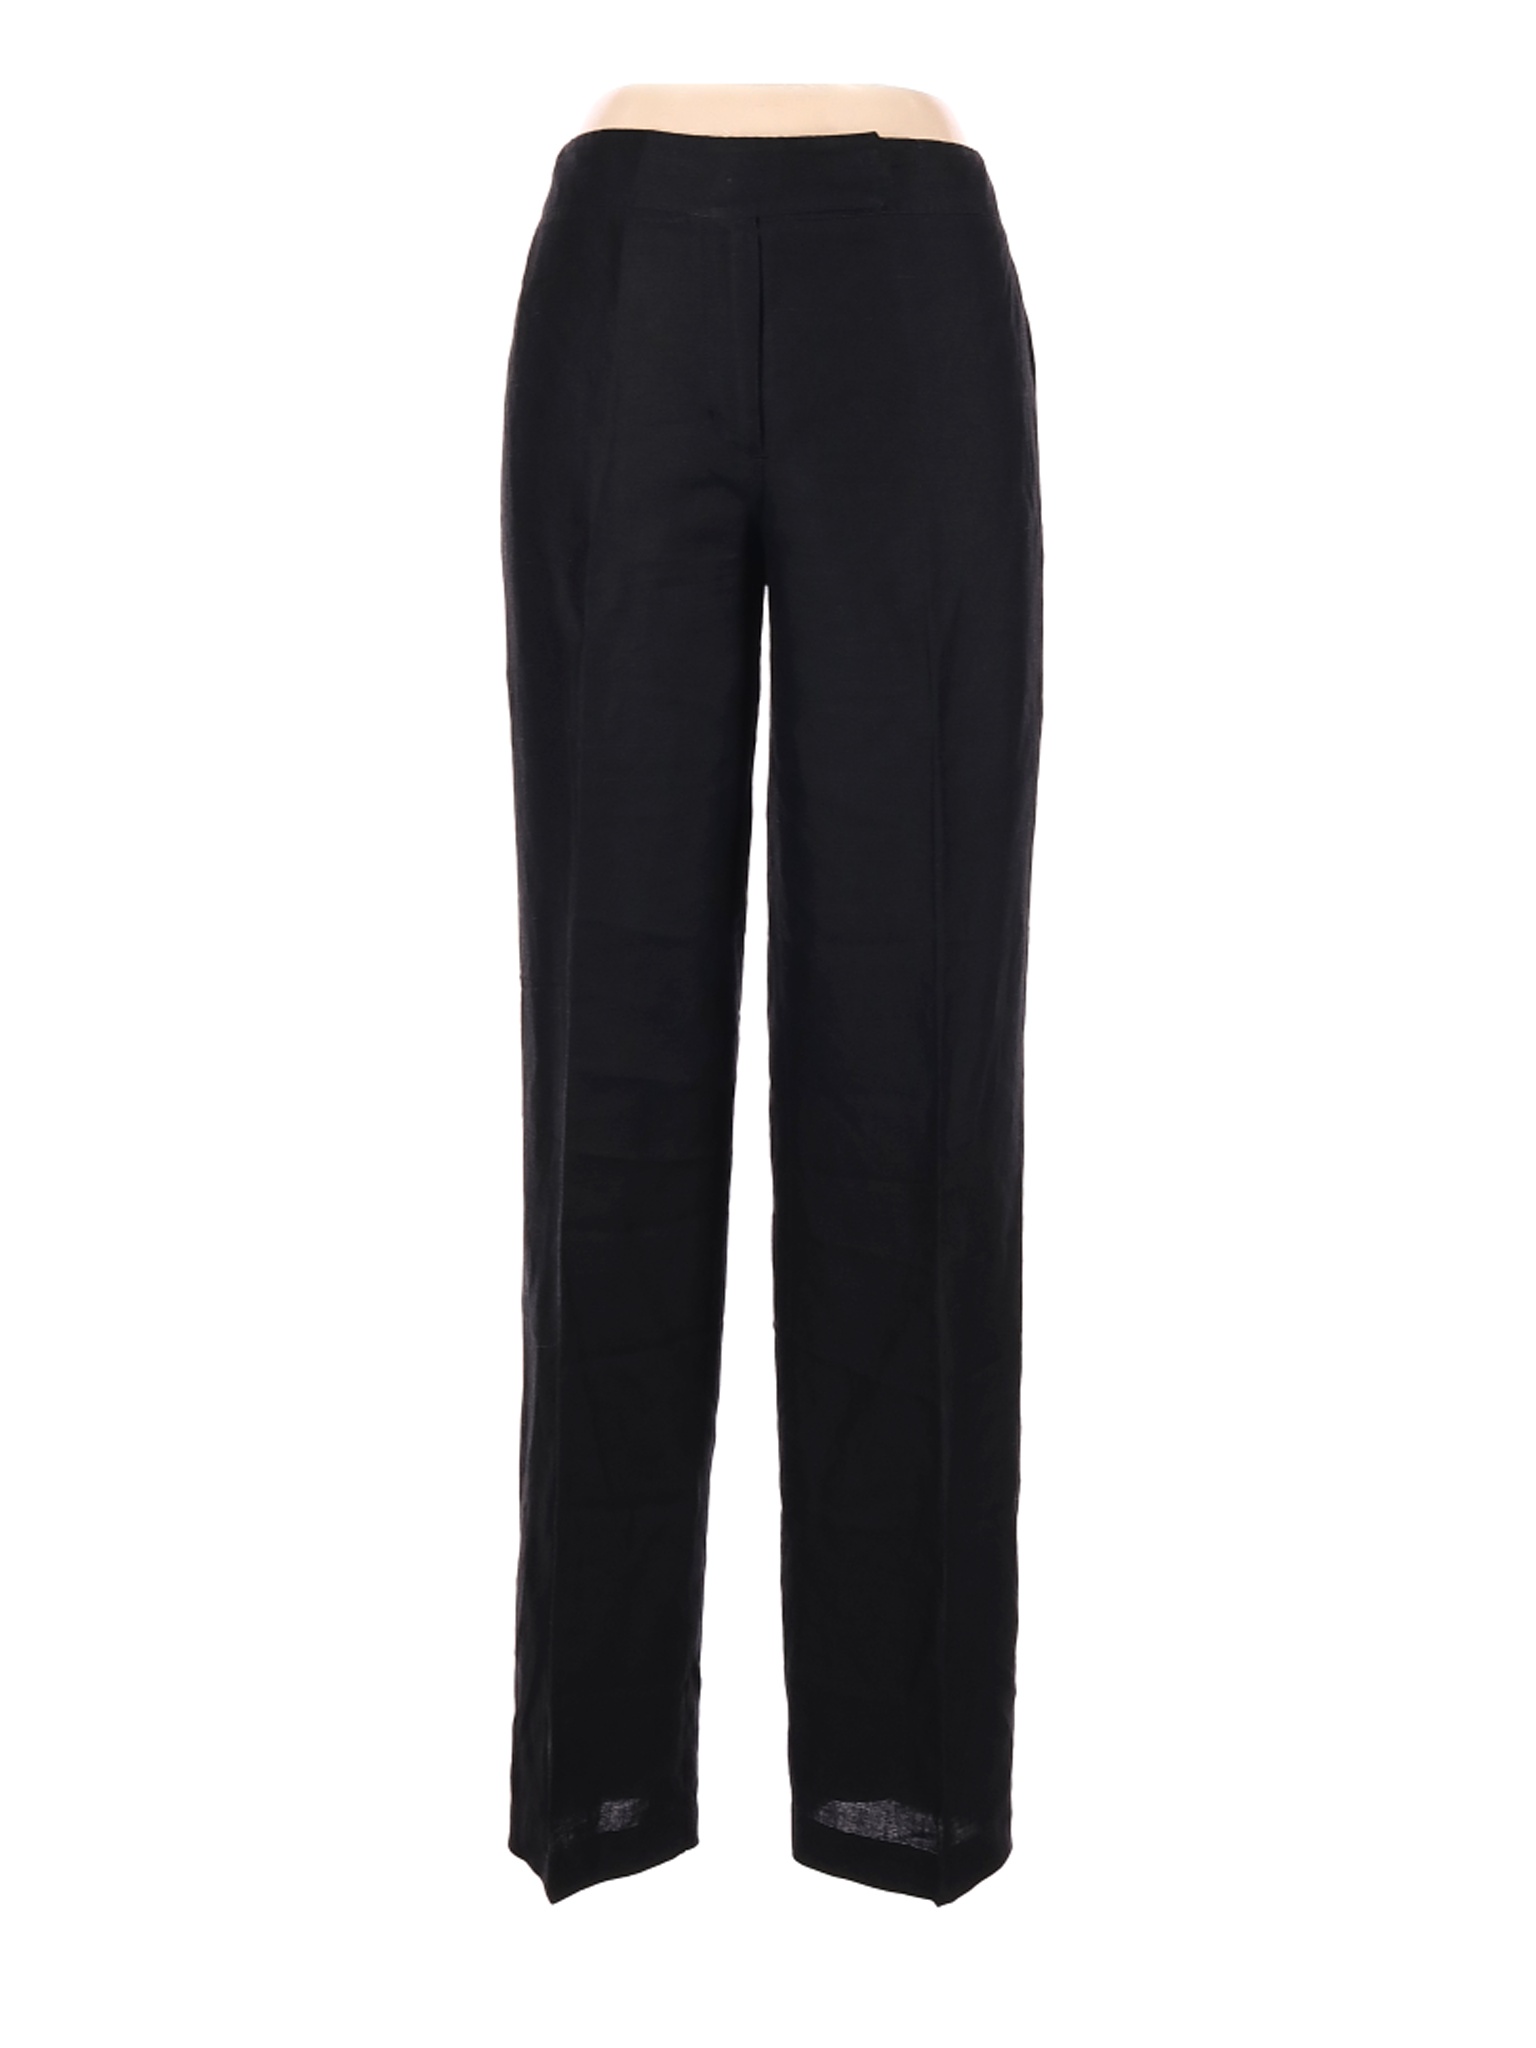 Debenhams Women Black Linen Pants 10 | eBay